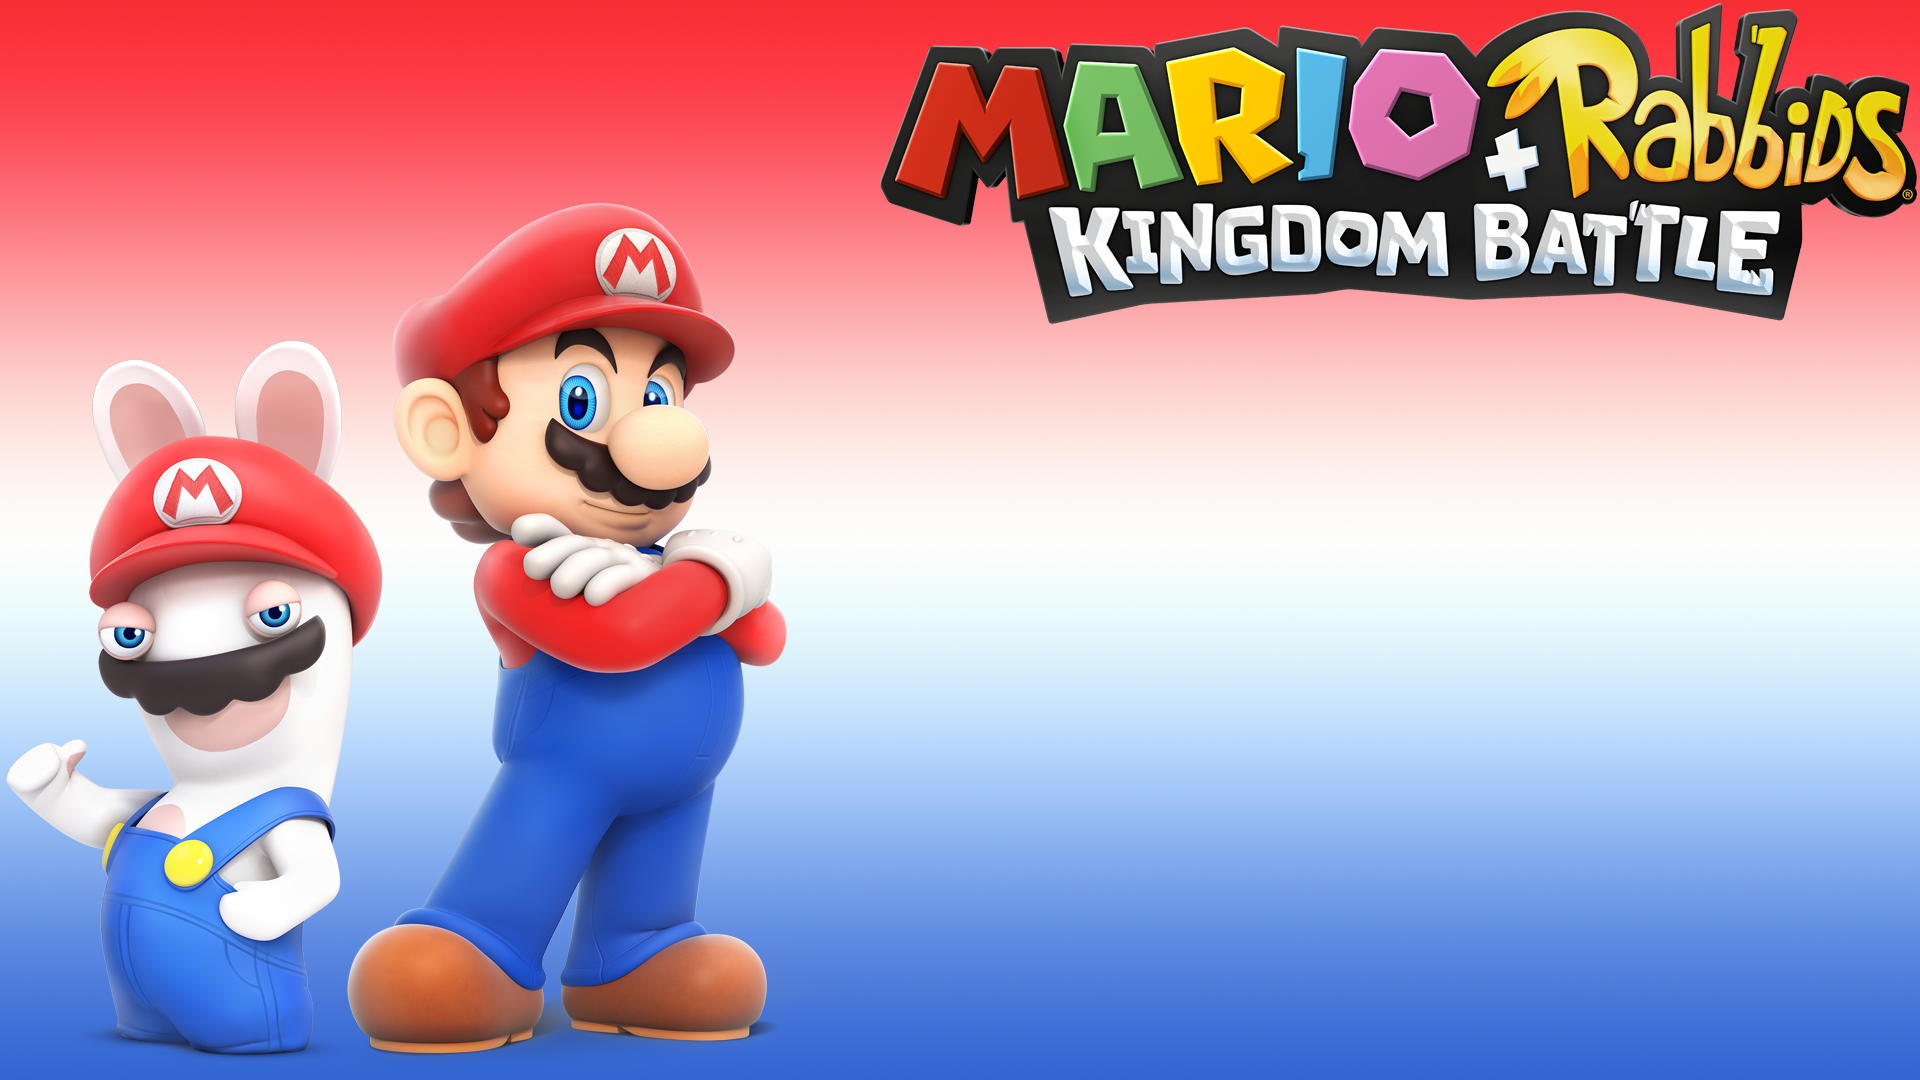 Mario Rabbids Kingdom Battle HD Wallpaper Background Image